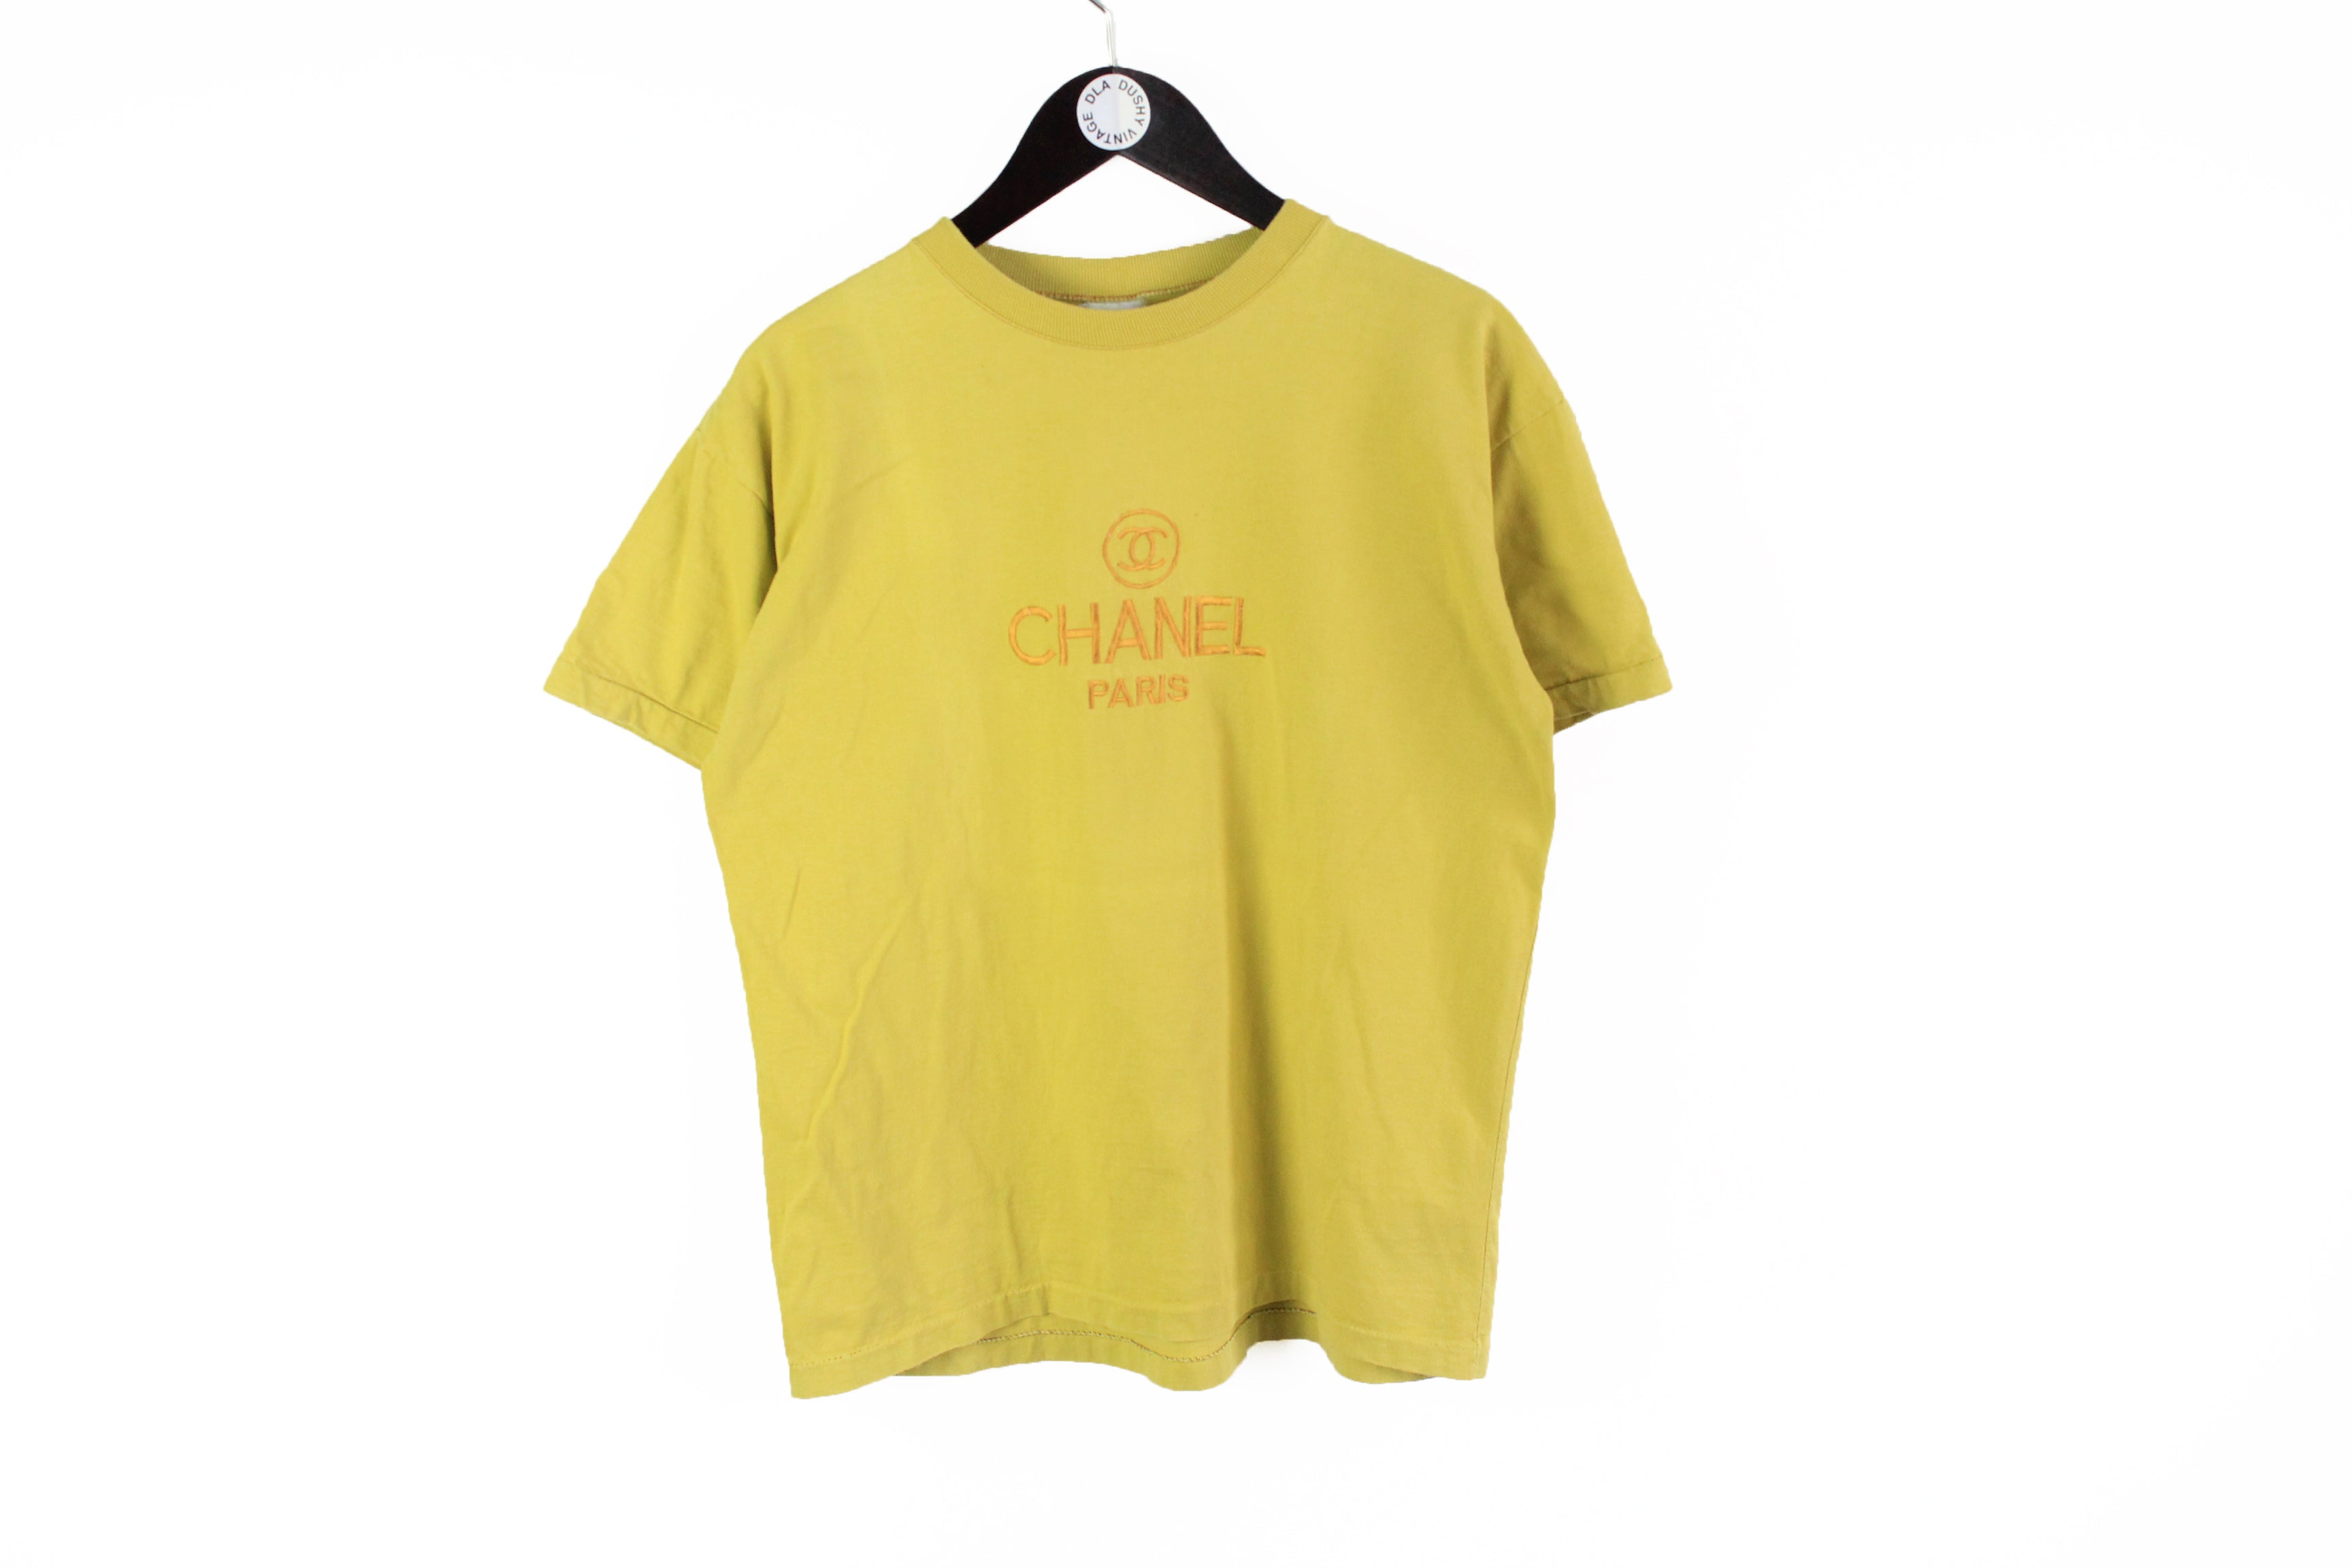 Vintage Chanel Tag Cotton T-Shirt (No size description) & Vintage Chanel  Chevron Bum Bag in the size #70🖤 Available online for…